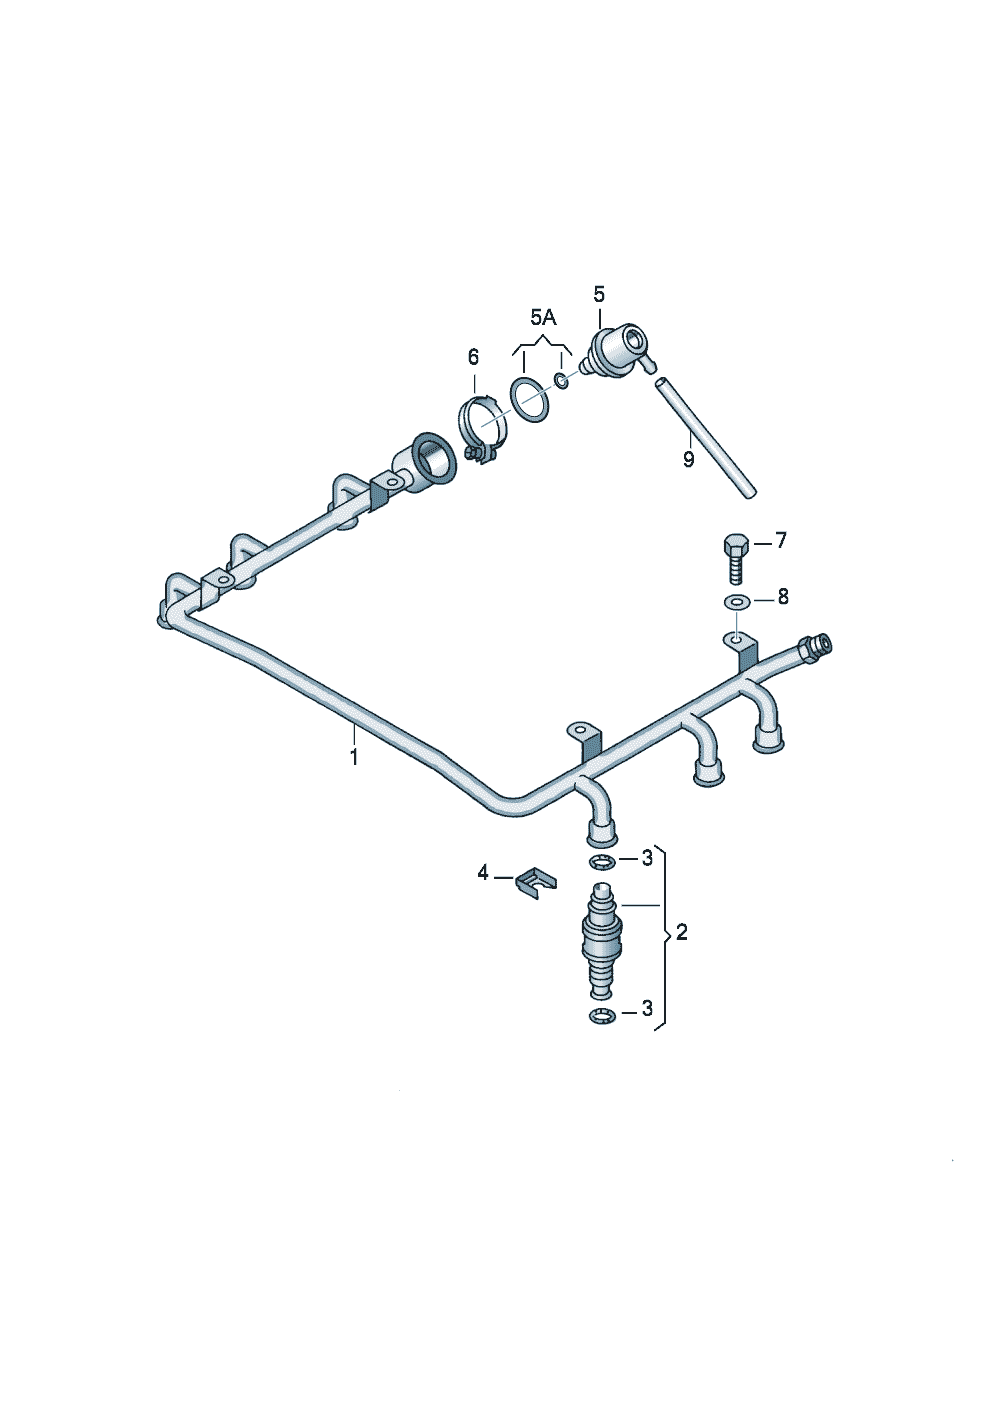 Injection valvepressure regulatorFuel line 2.6/2.8ltr. - Audi Cabriolet - aca